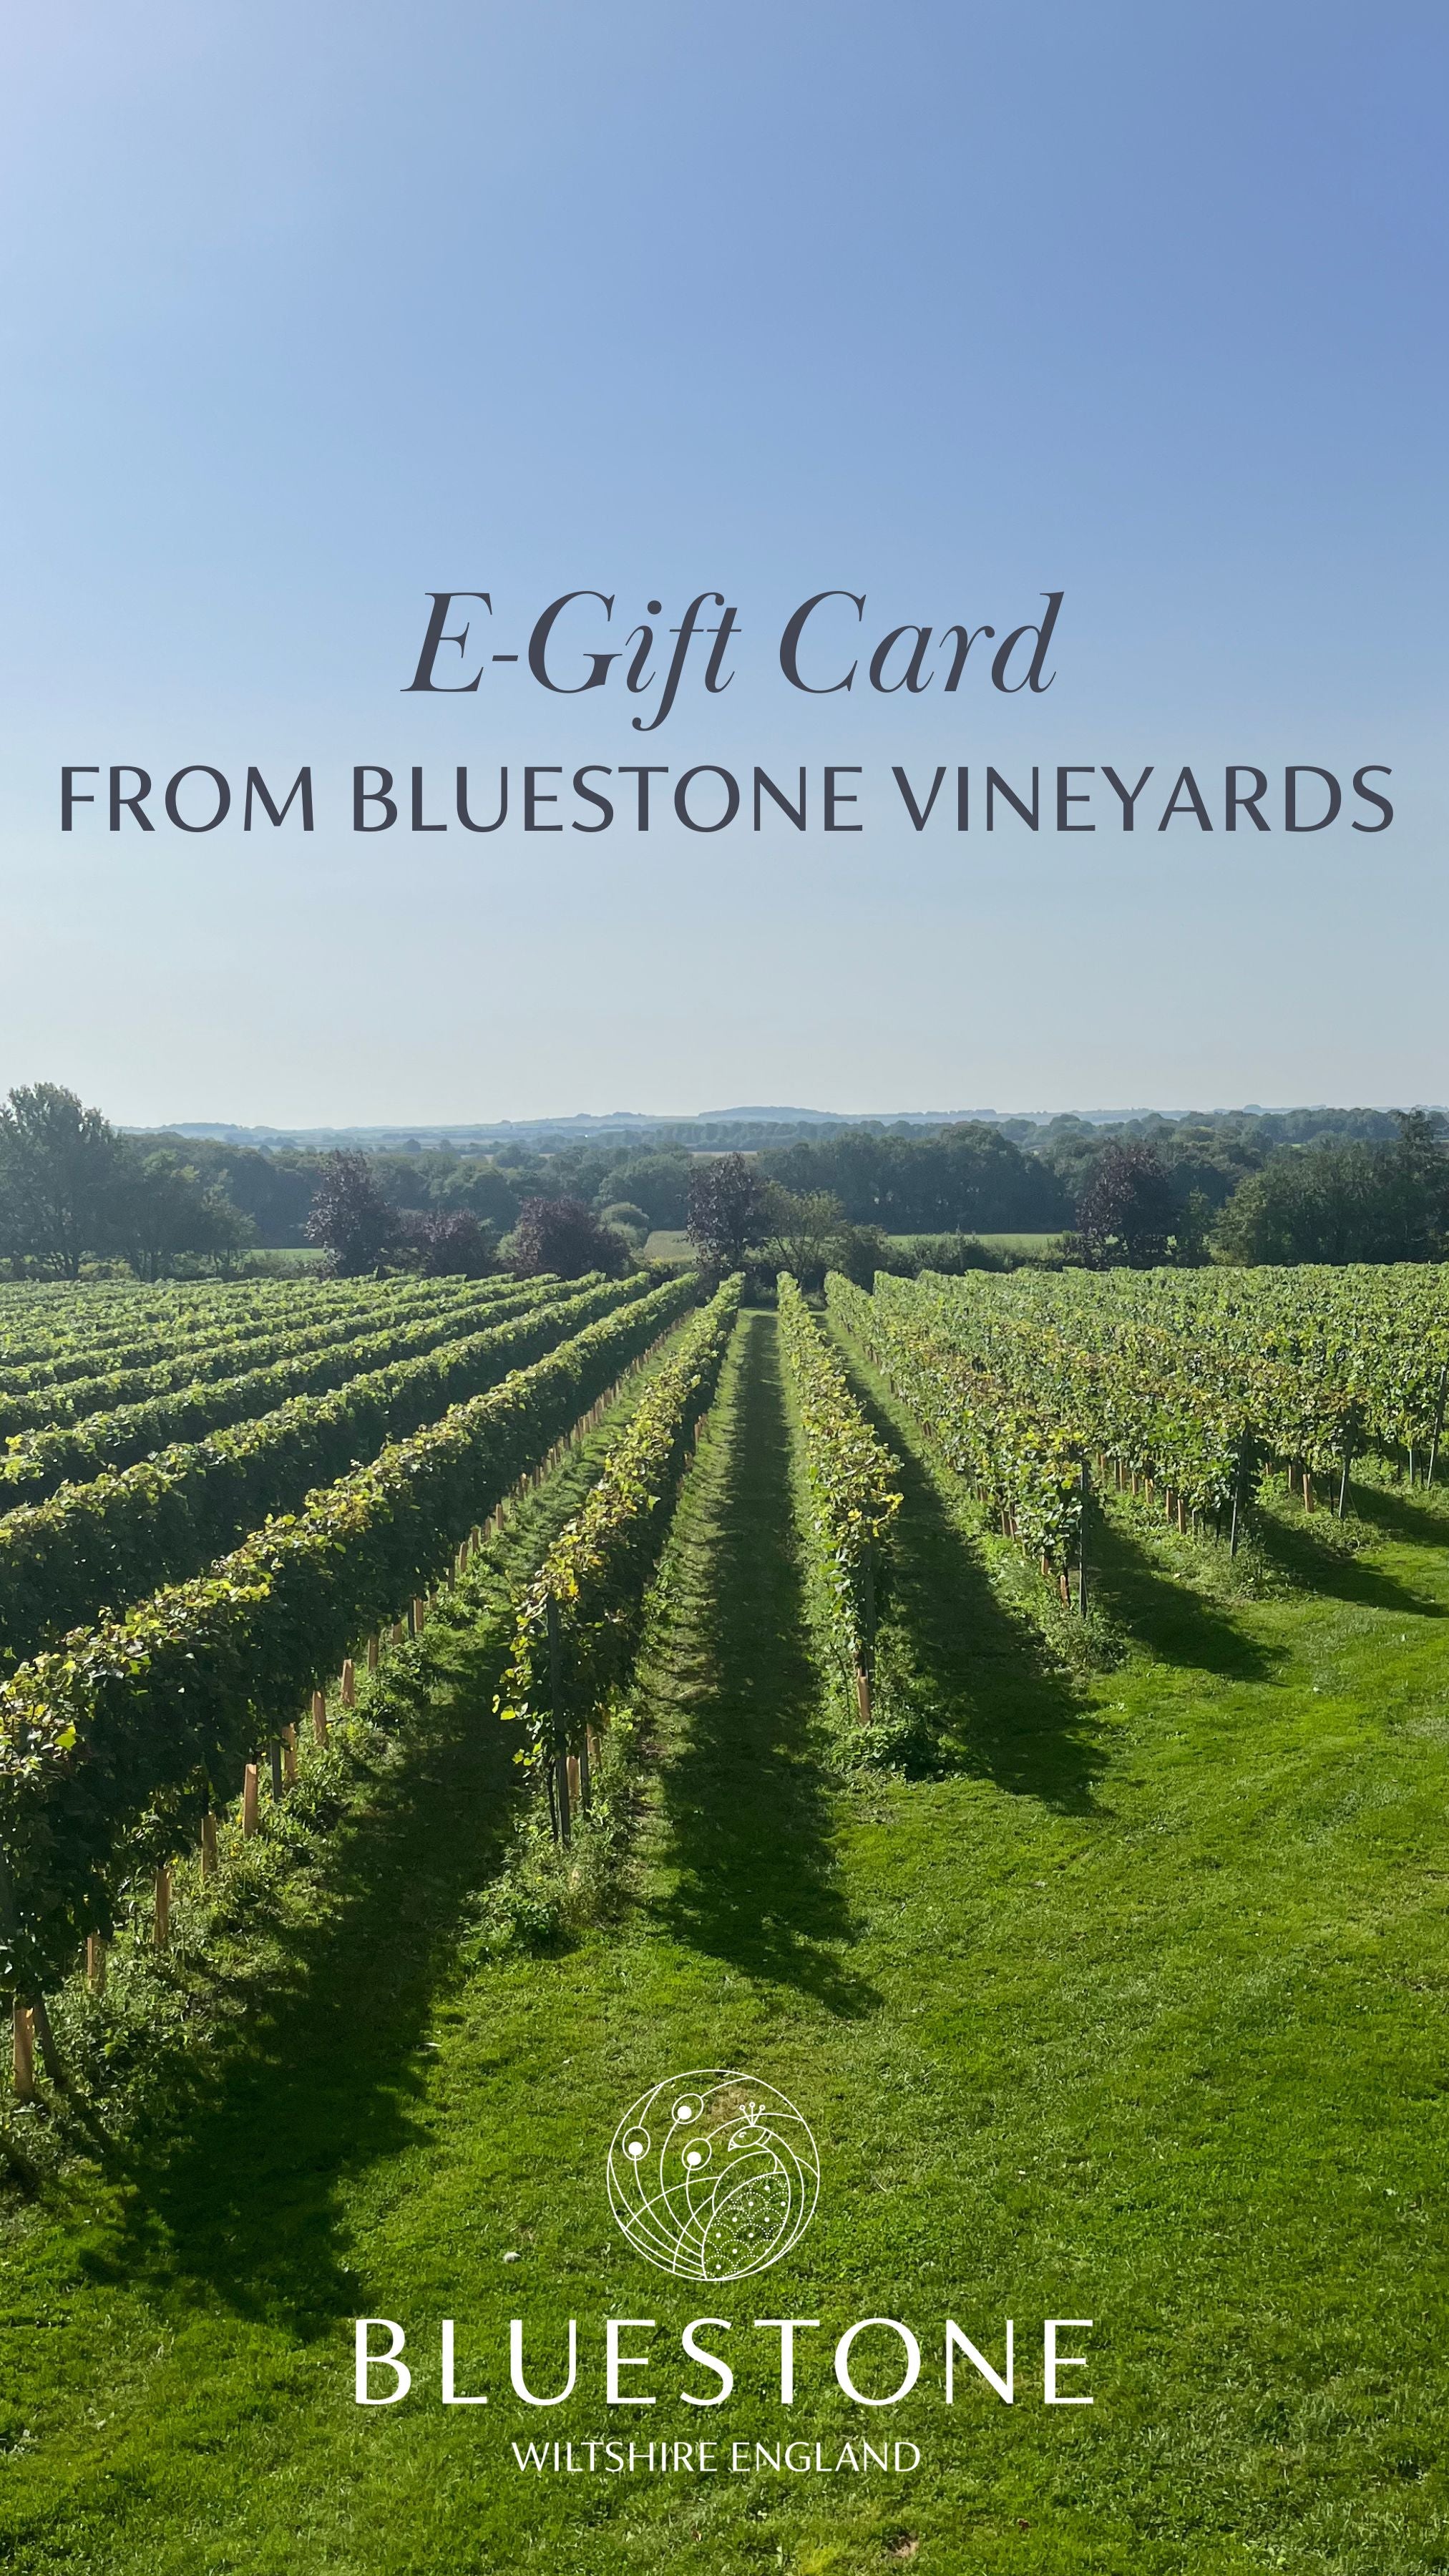 E-gift Cards by Bluestone Vineyards